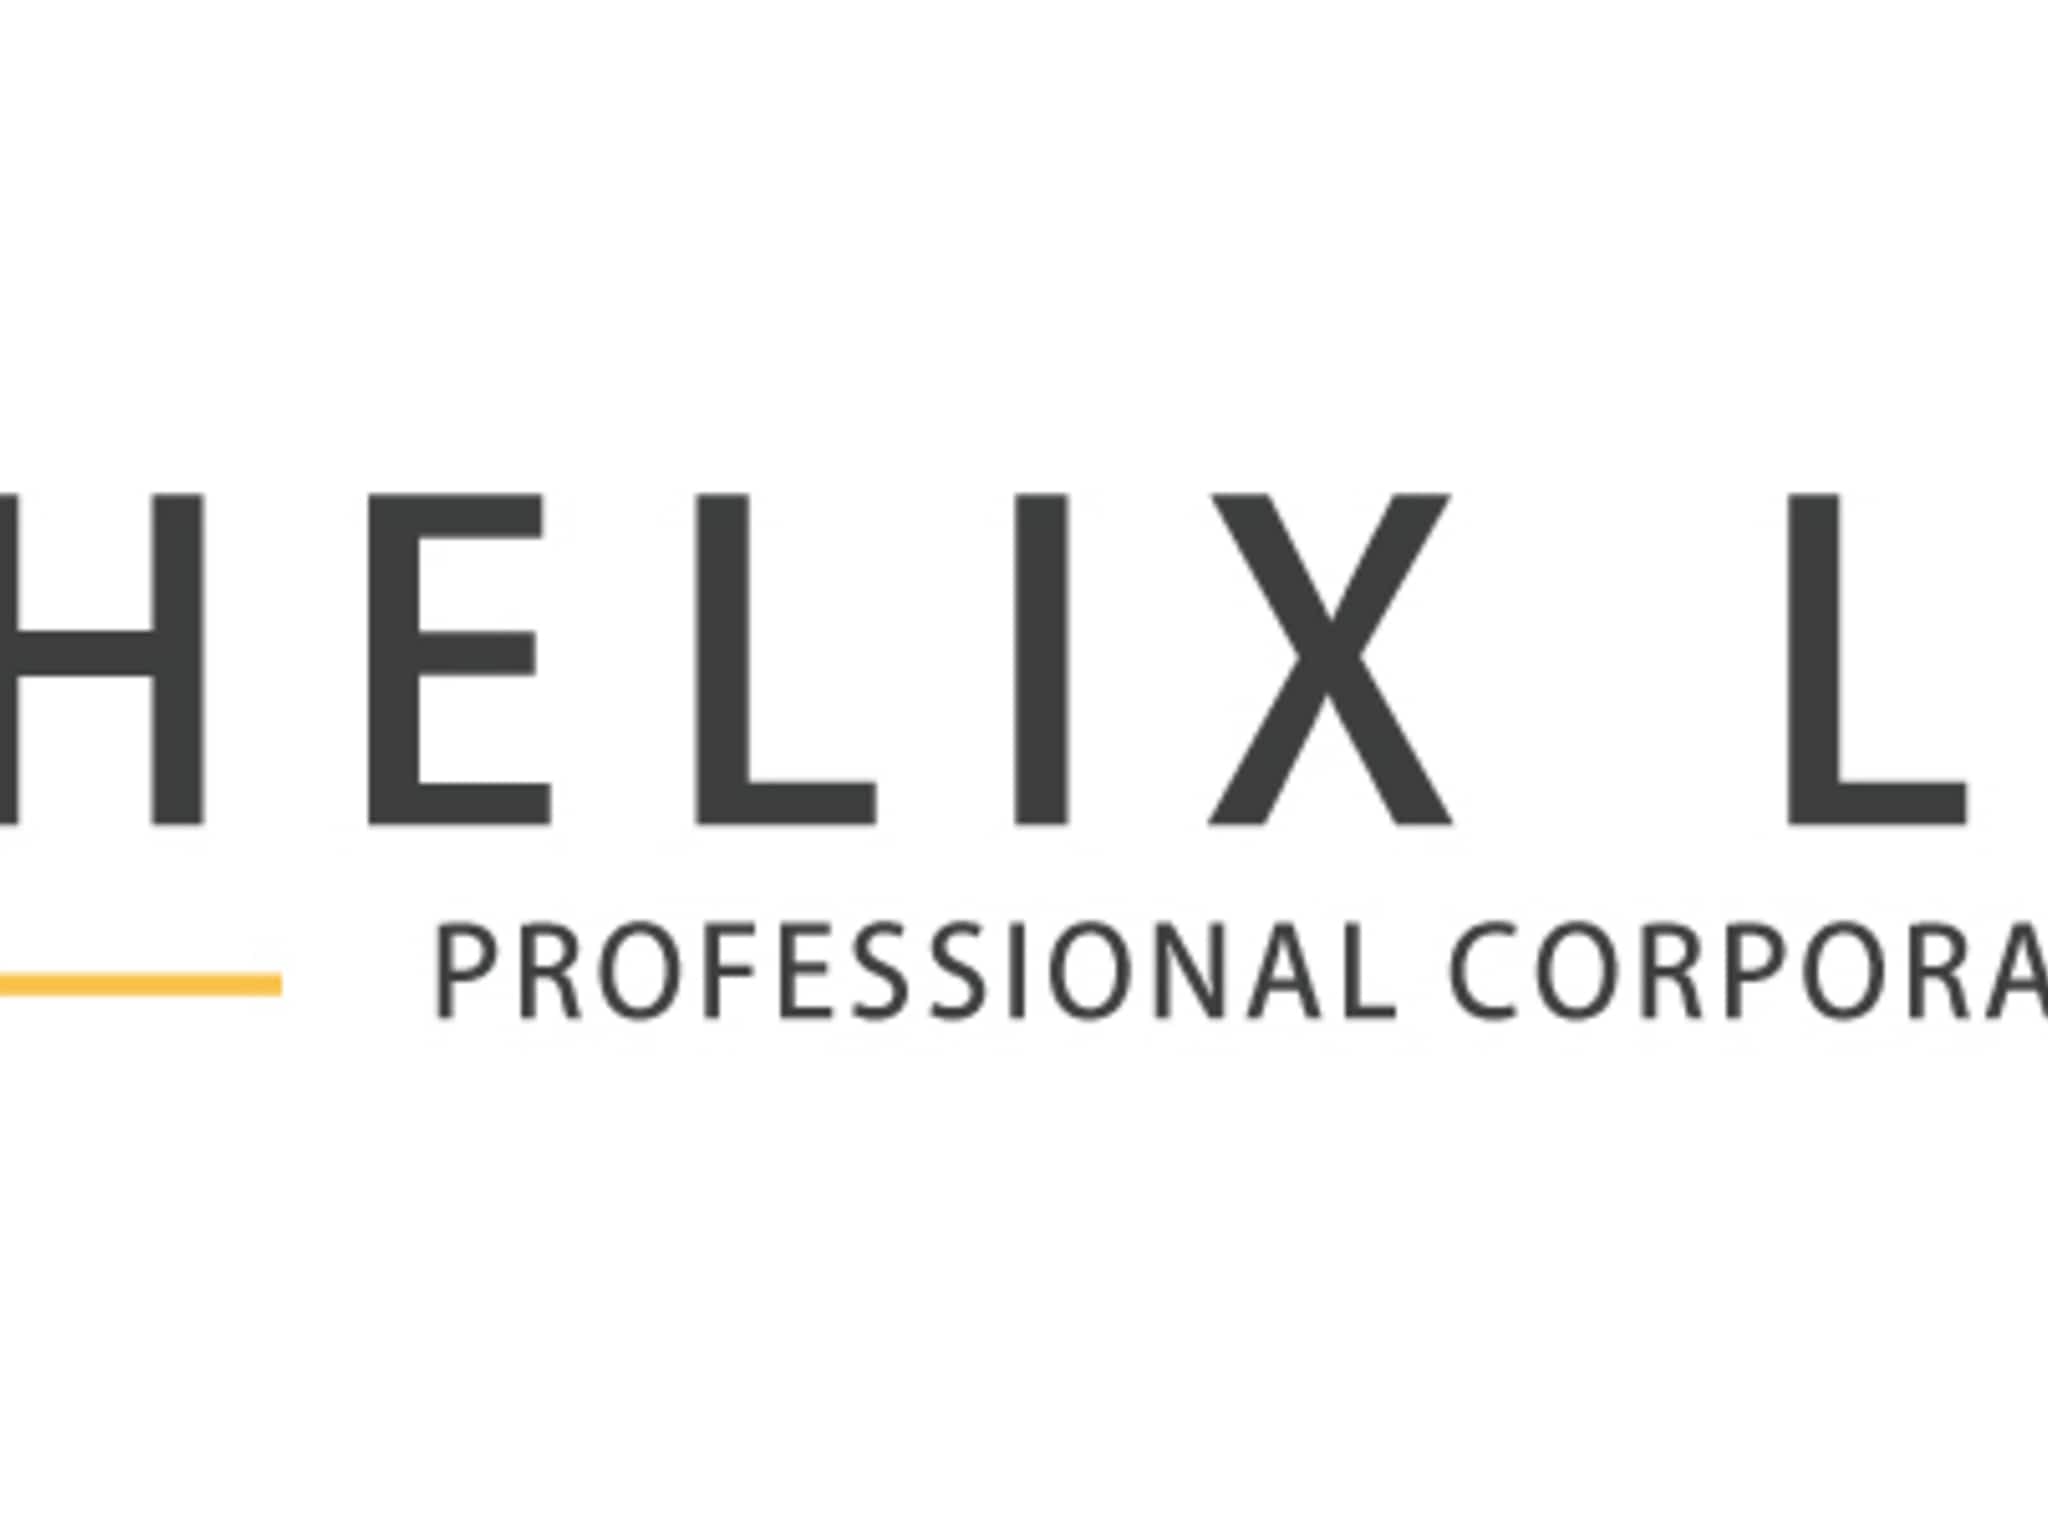 photo Helix Law Professional Corporation